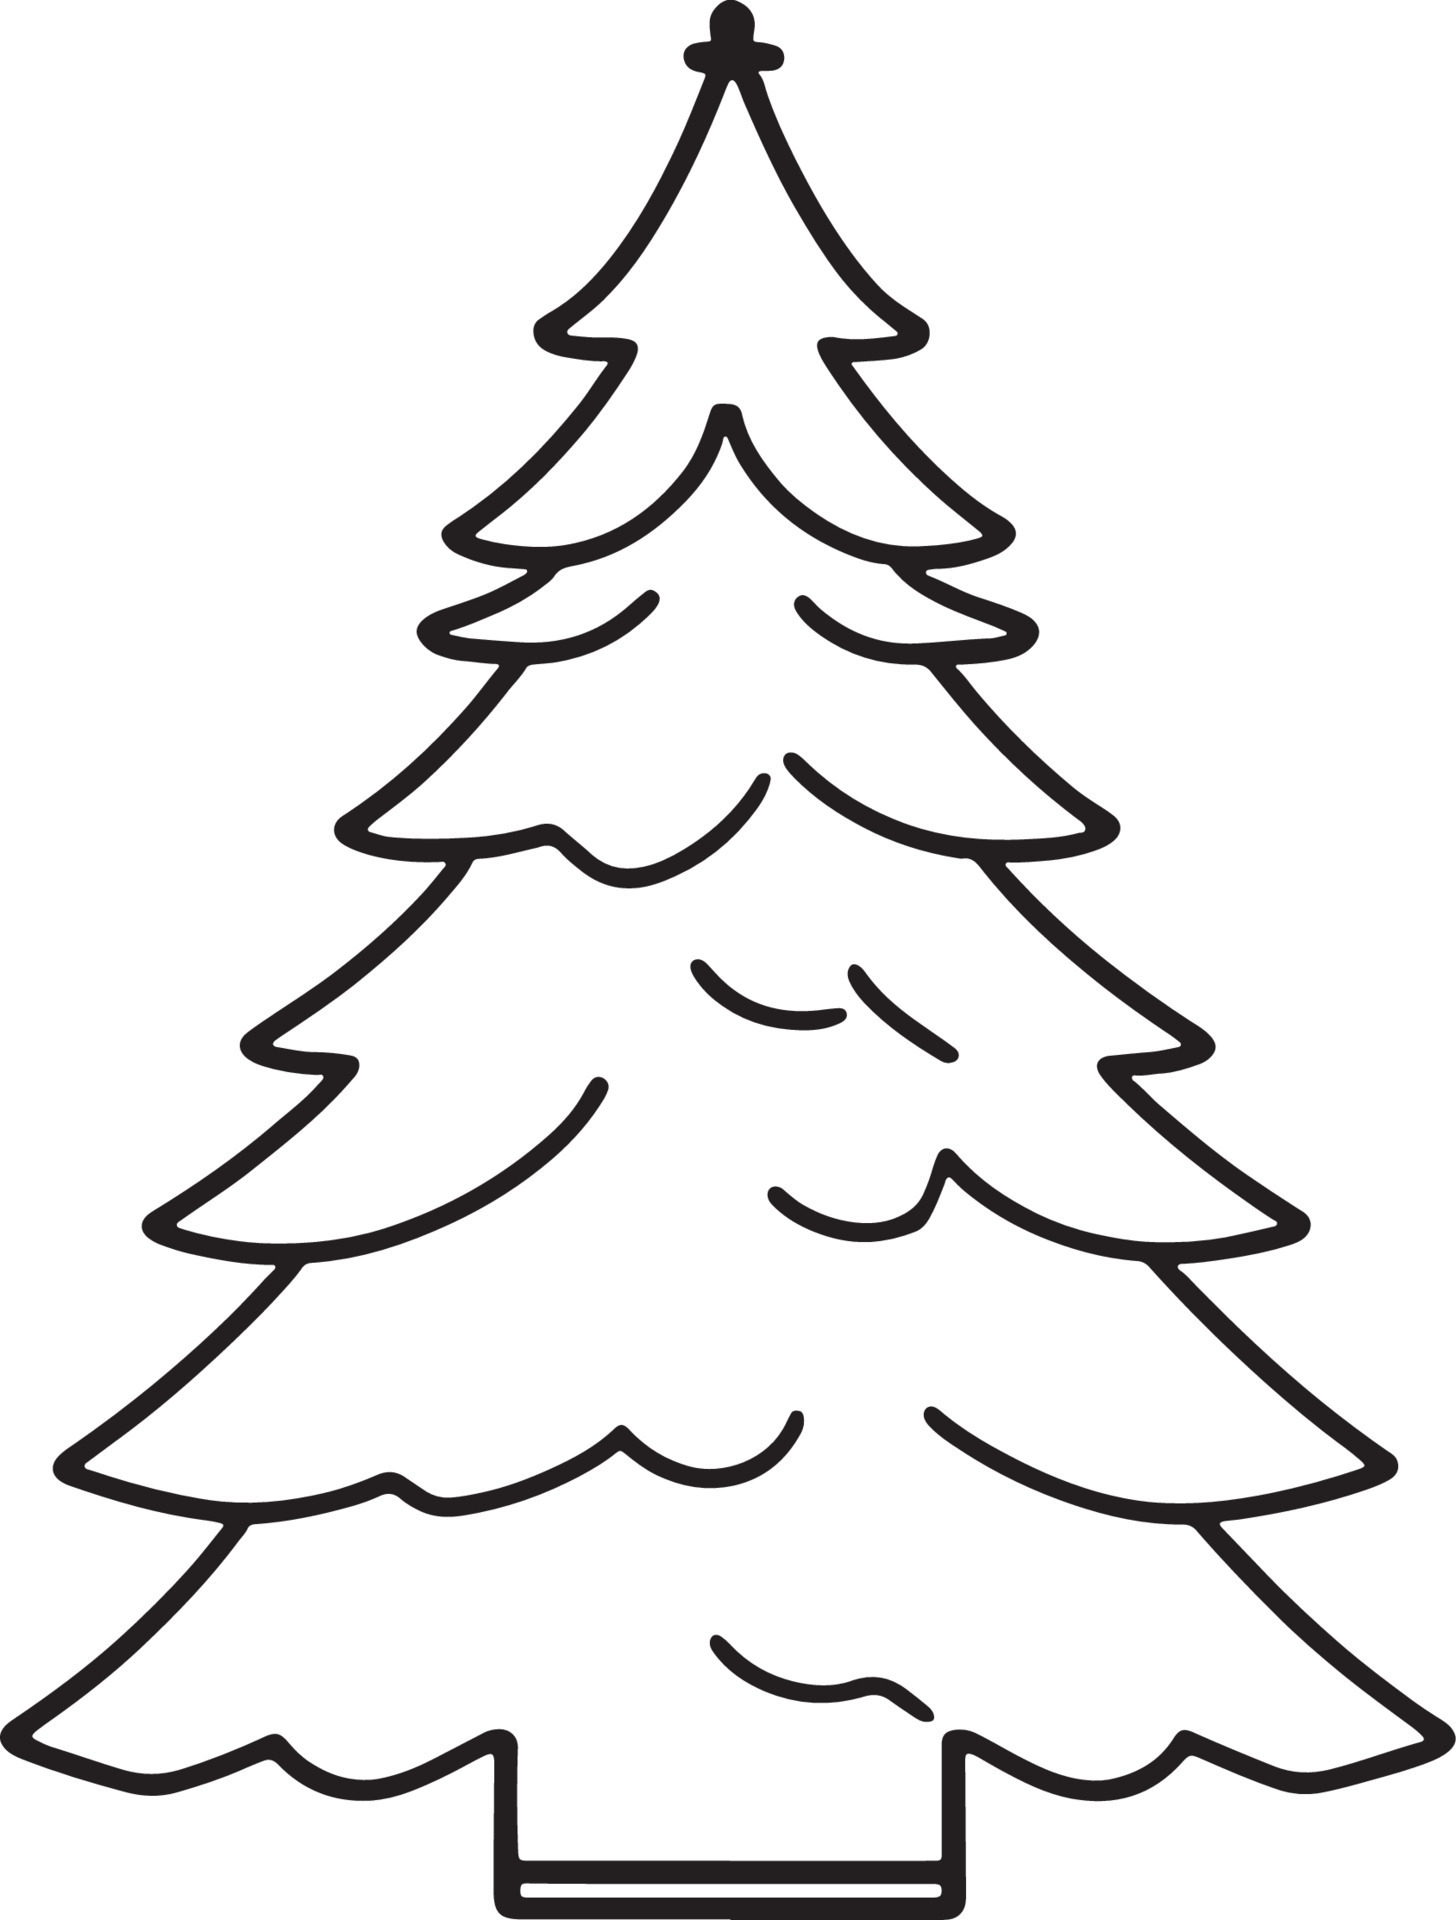 Minimalist Hand-Drawn Pine Tree Illustration in Flat Design Style ...